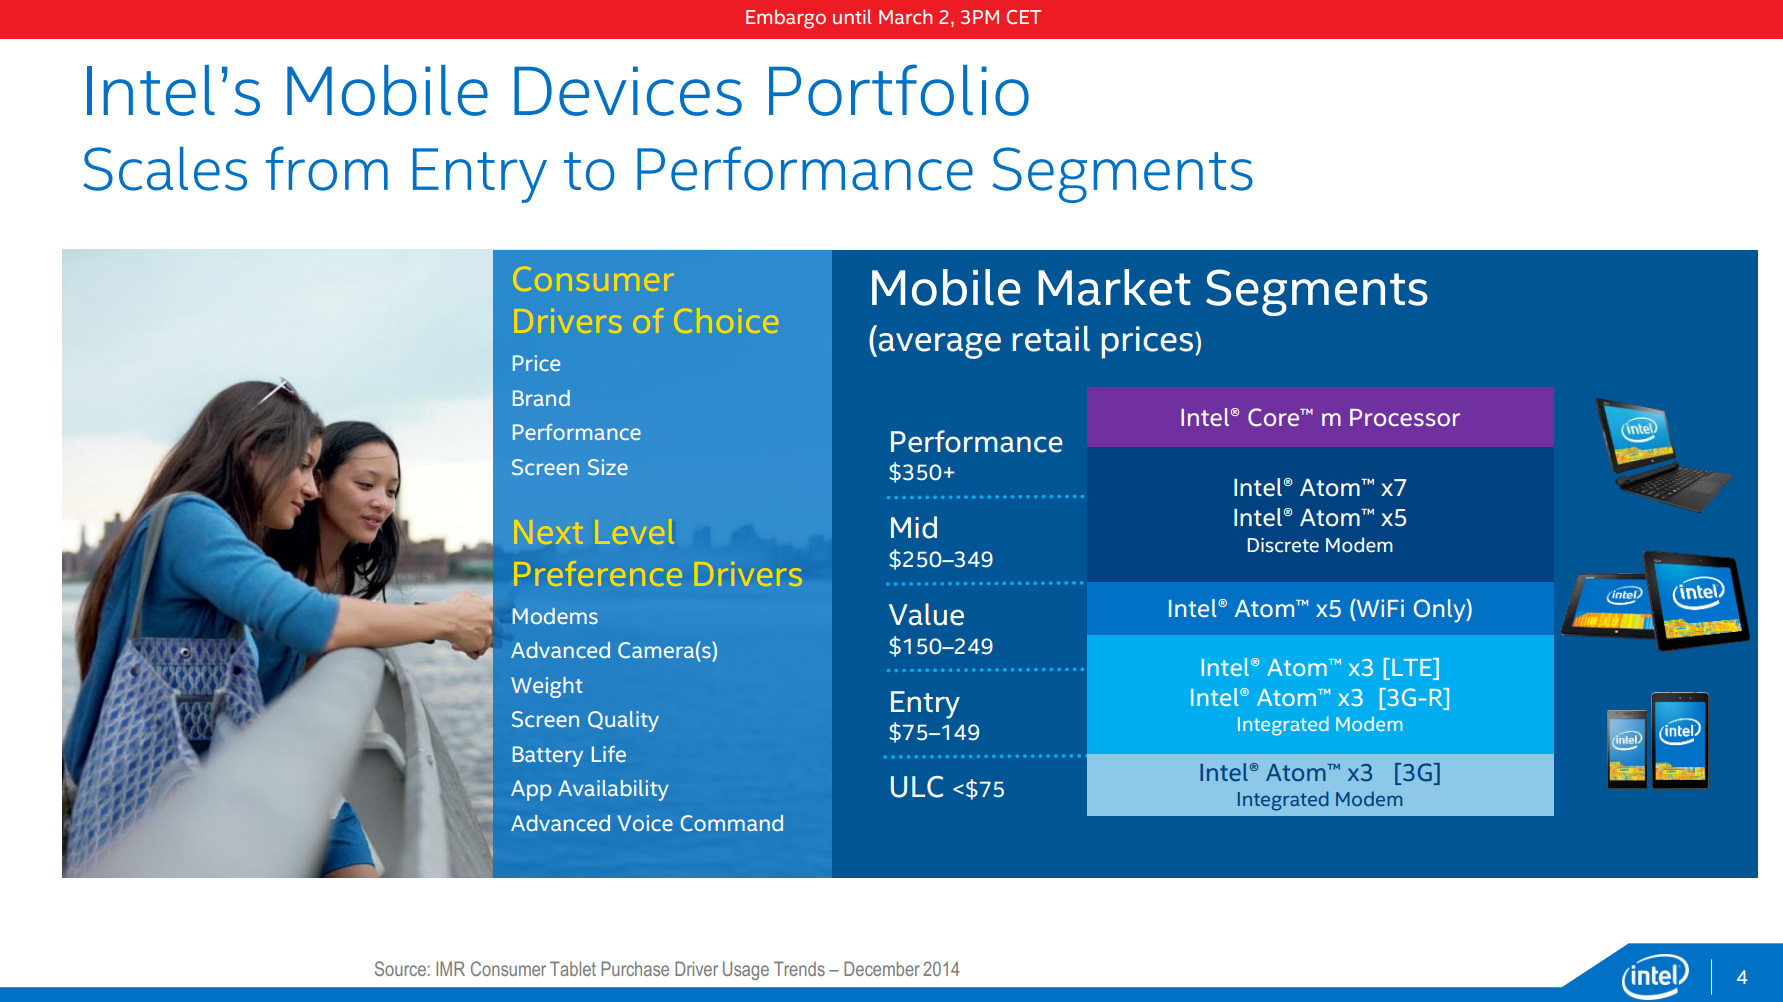 Intel Atom product segments